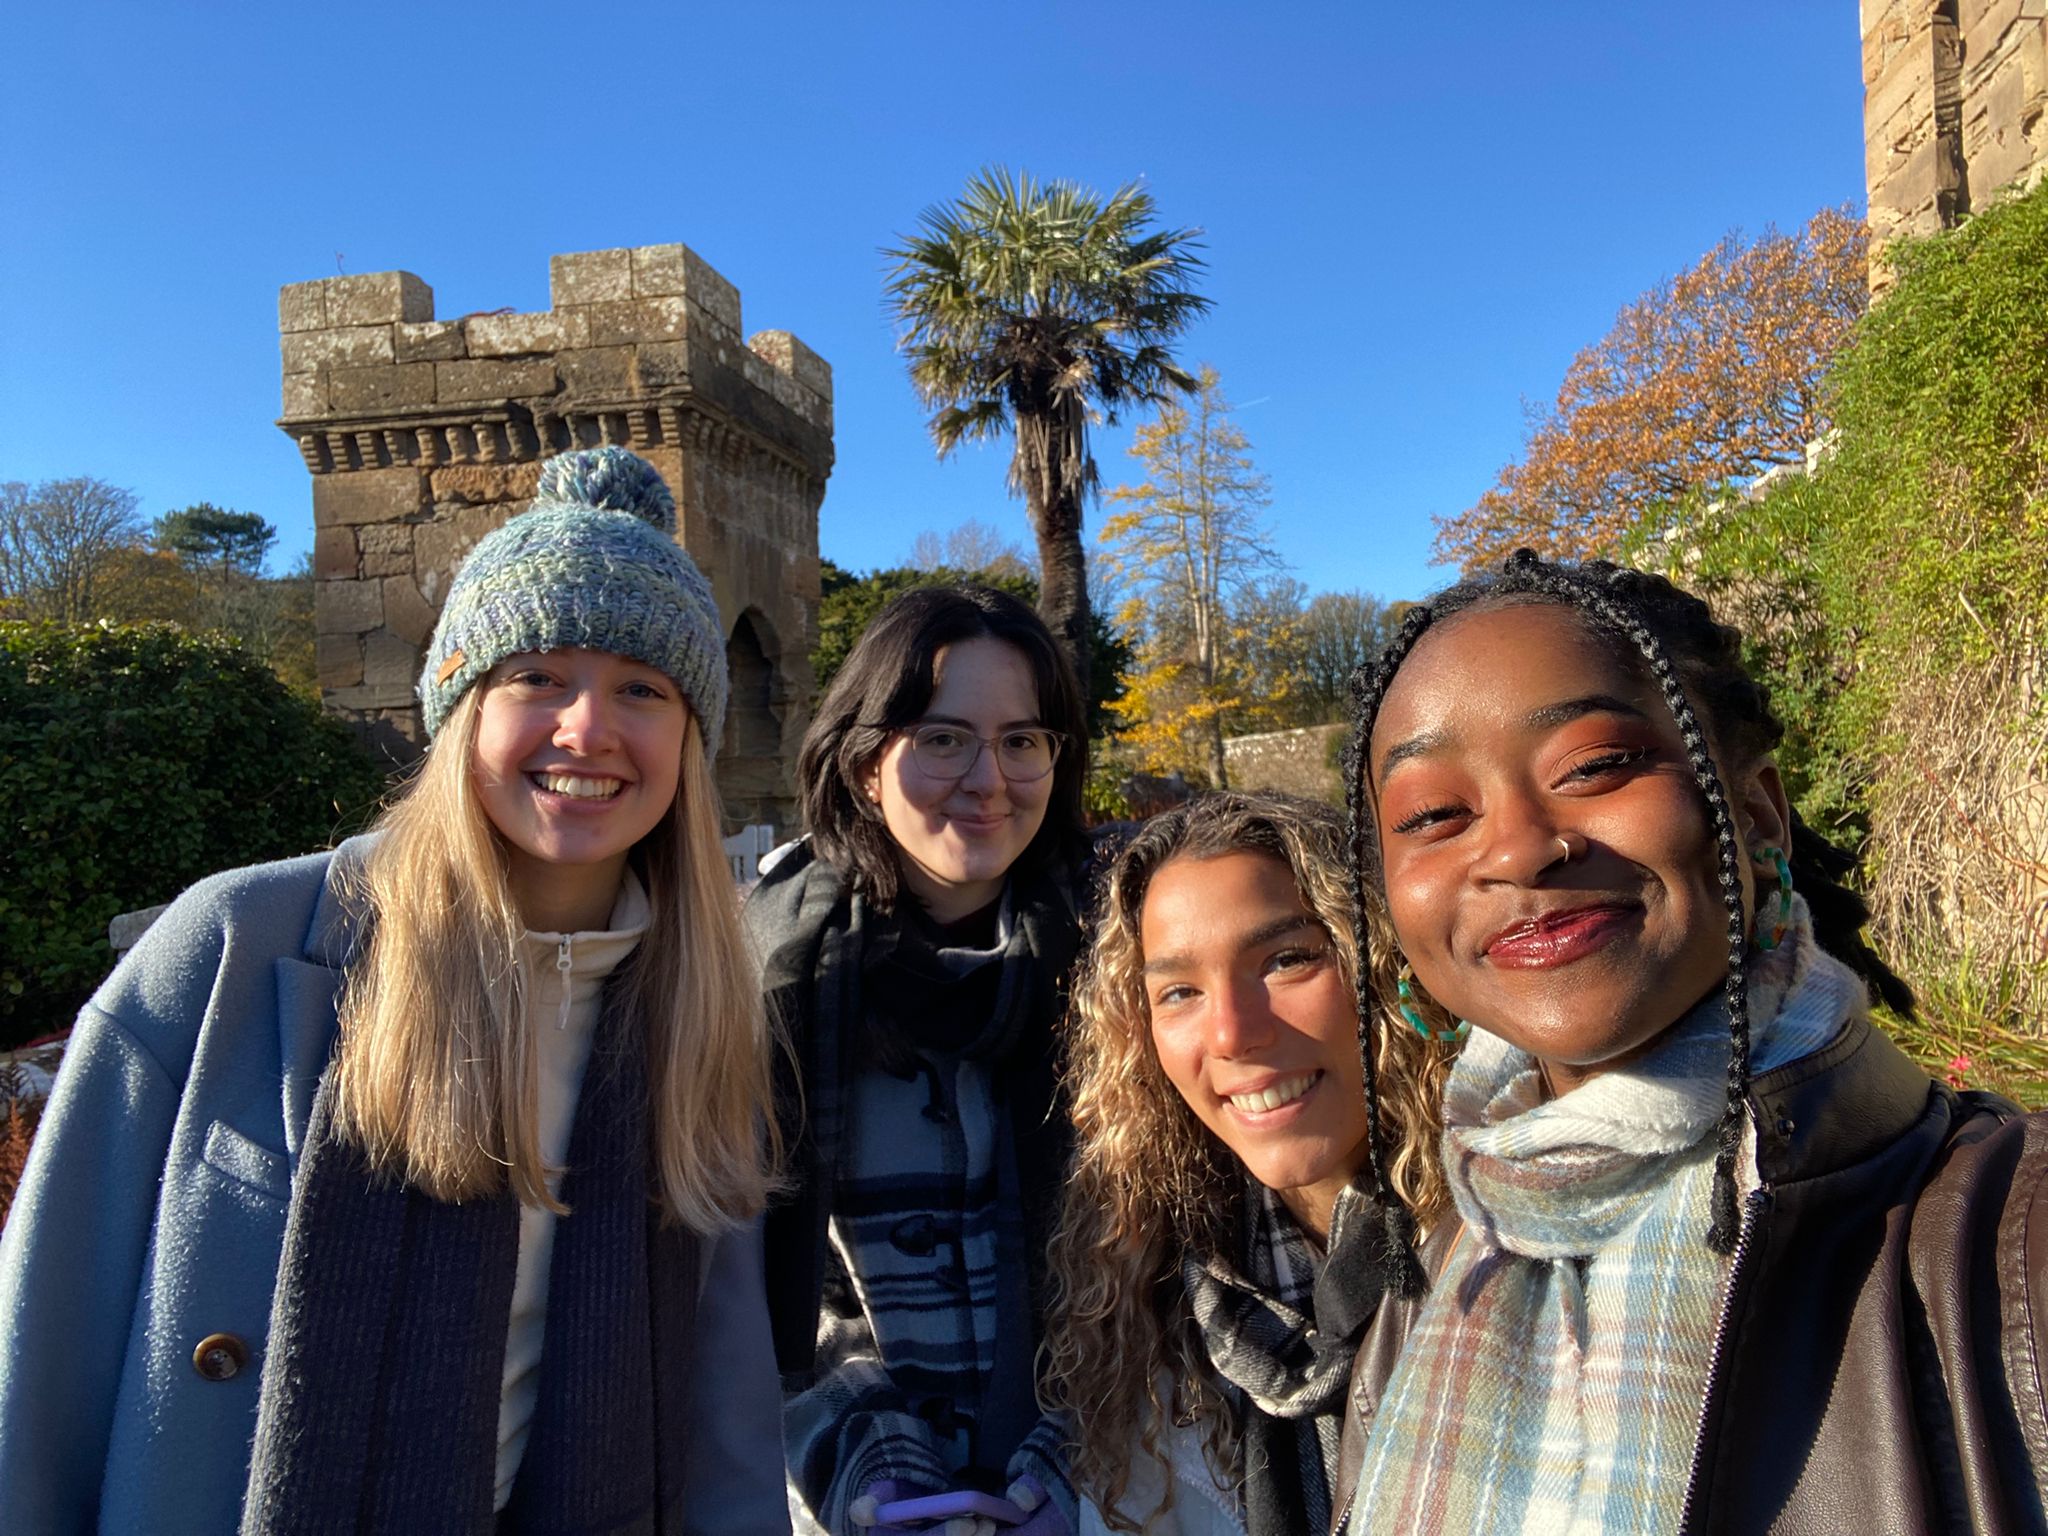 Visiting Culzean Castle with friends